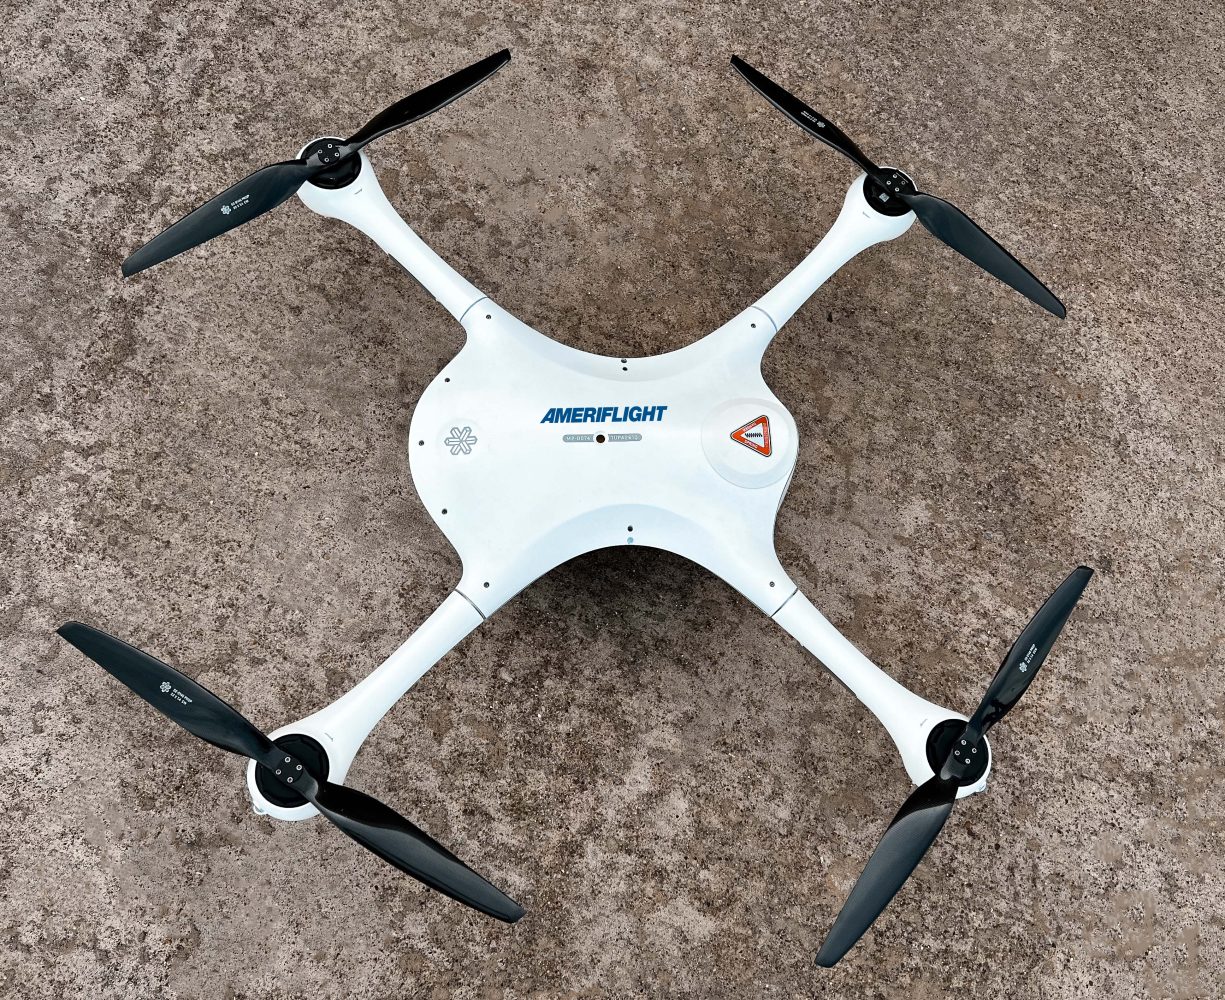 Ameriflight Matternet drone delivery